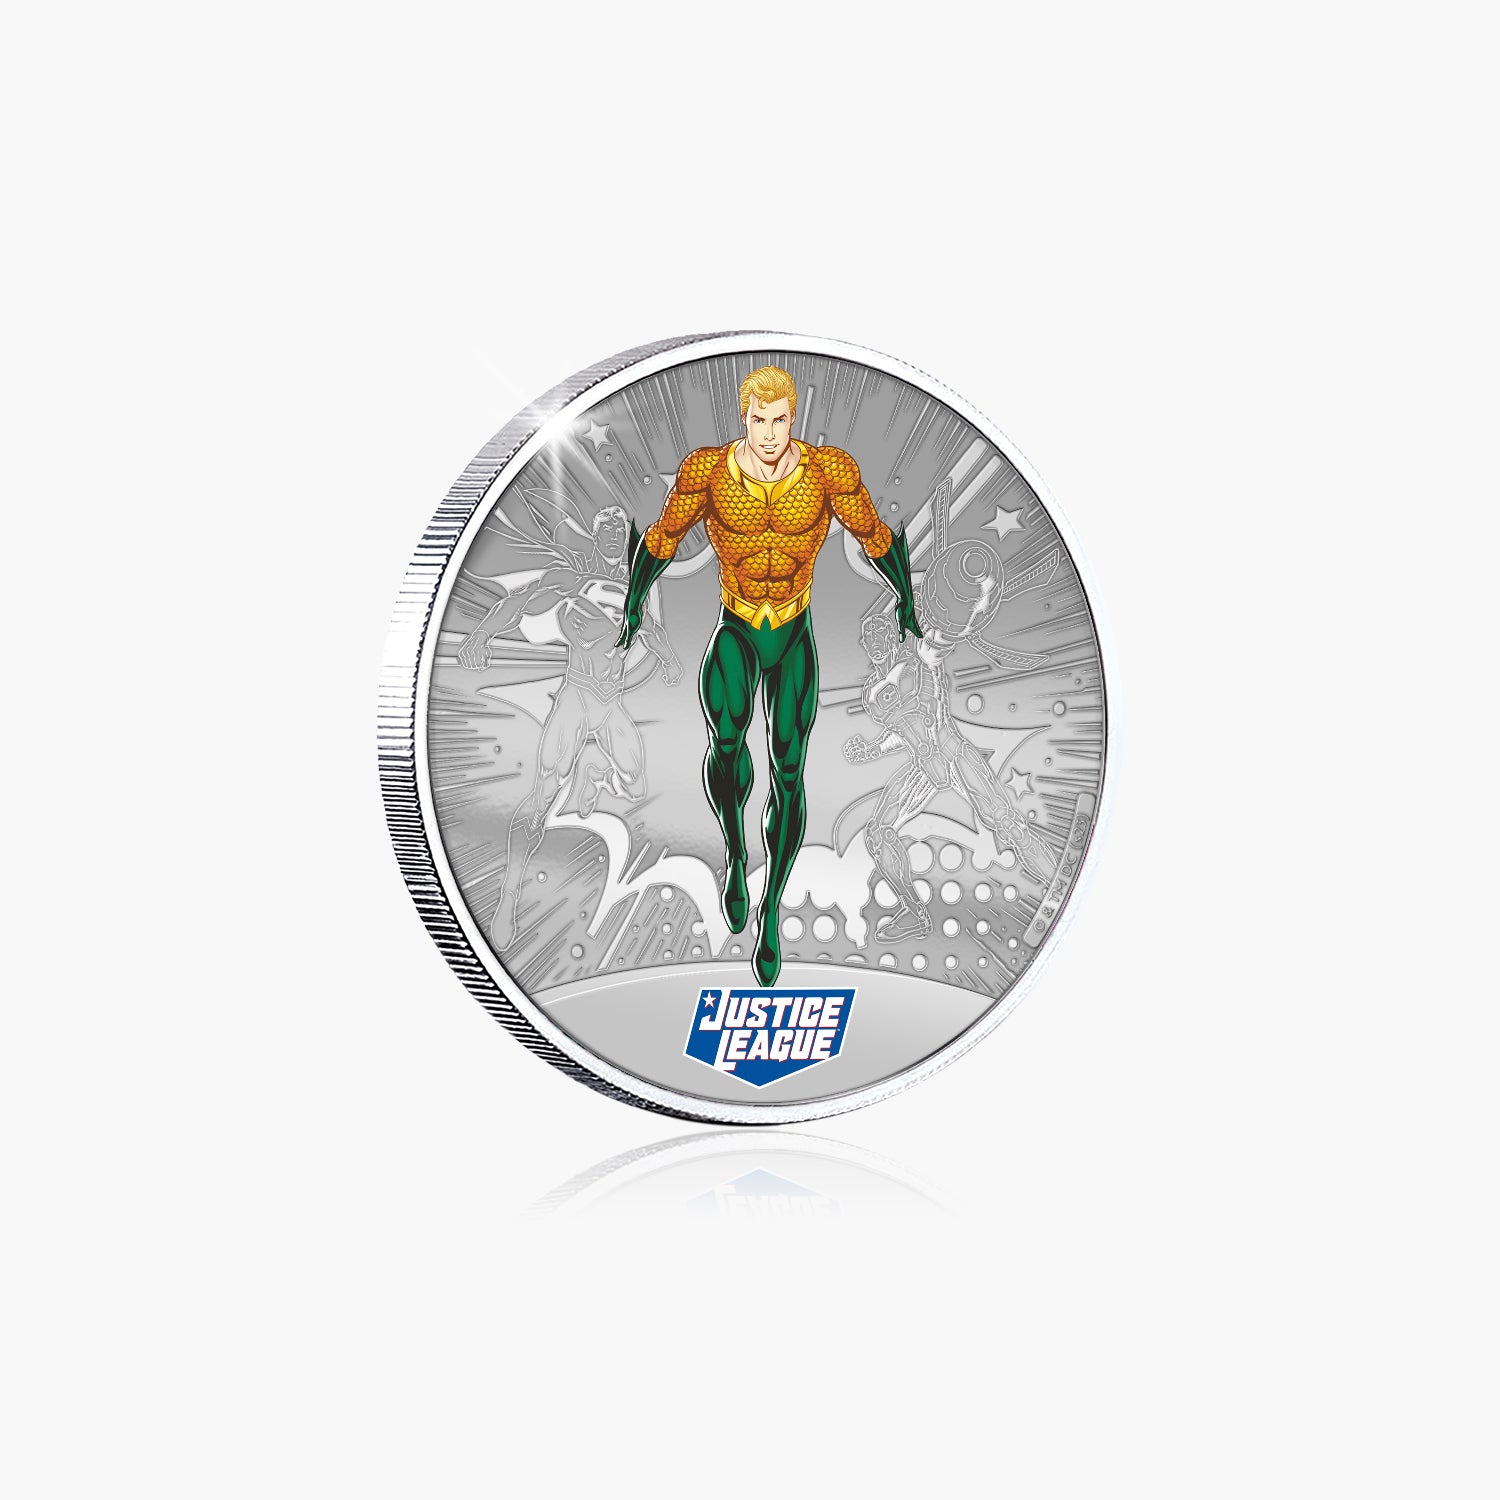 Justice League - Aquaman Silver Plated Commemorative